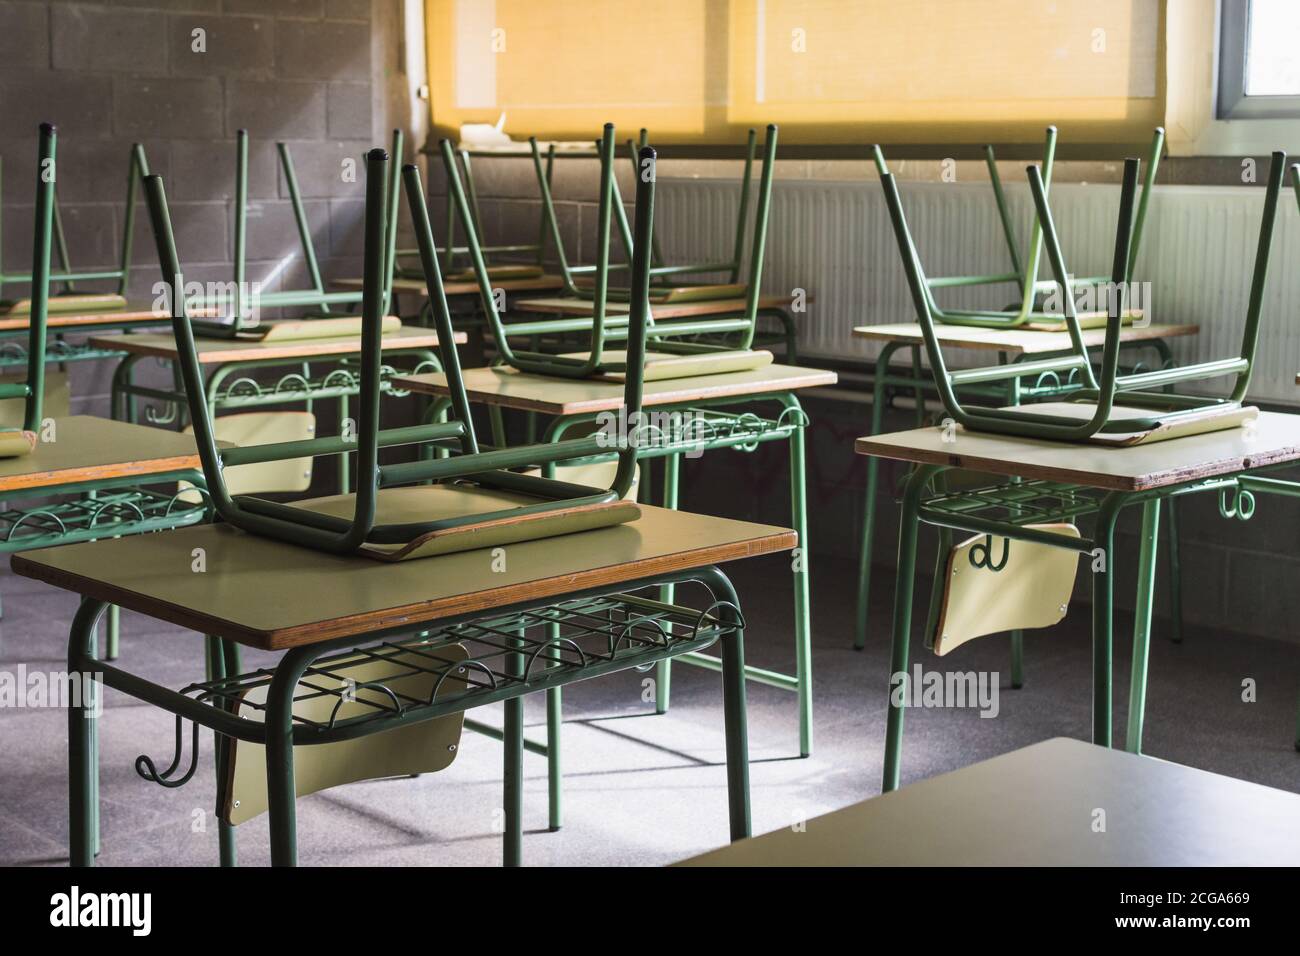 Empty school - due to corona virus COVID-19 Stock Photo